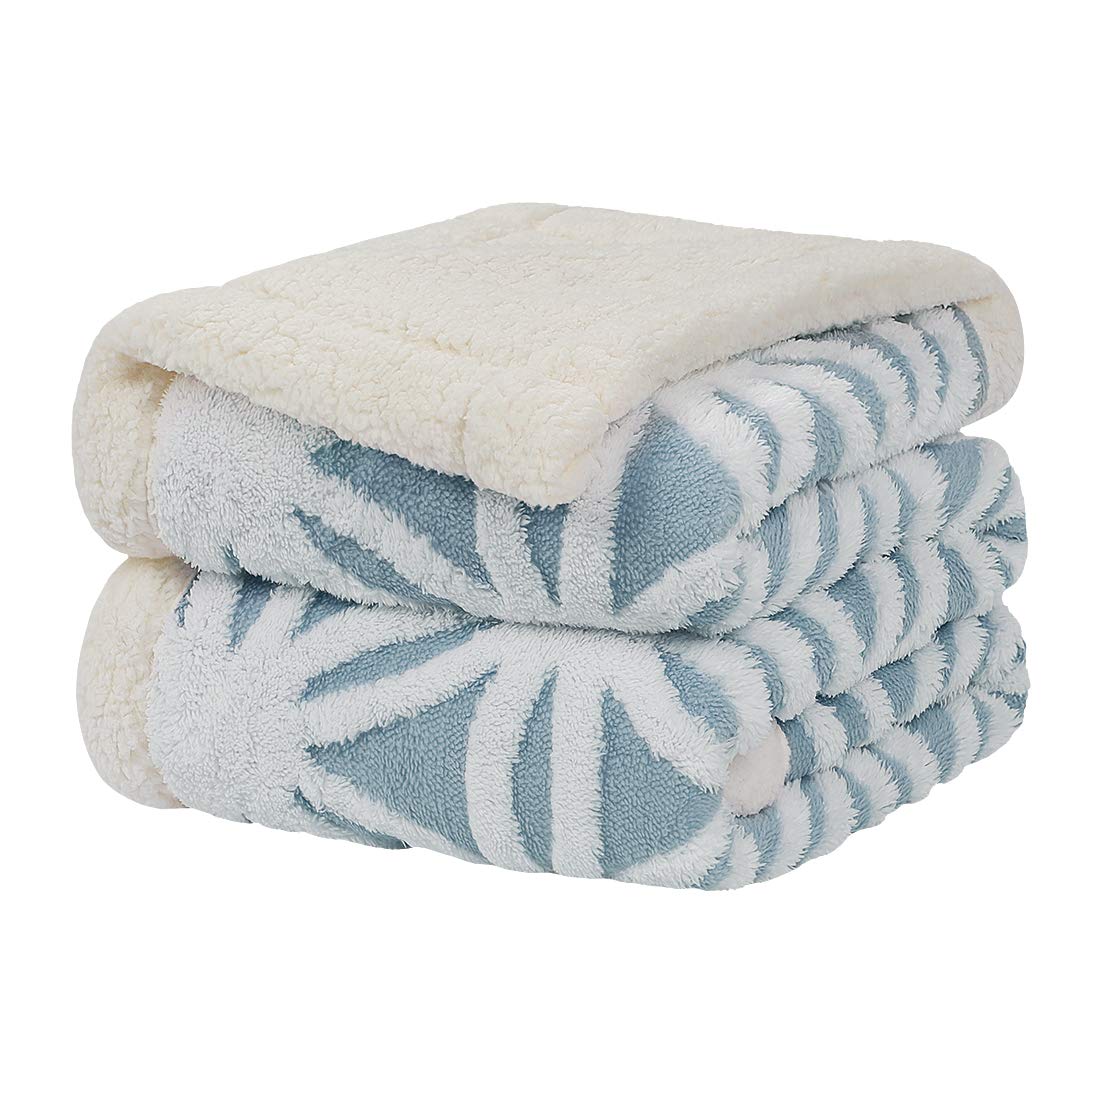 PiccoCasa Sherpa Fleece Blanket Throw Size,Jacquard Snowflake Pattern Decors Throw Blanket,Soft Reversible Fuzzy Microfiber Plush Fleece Blankets f...